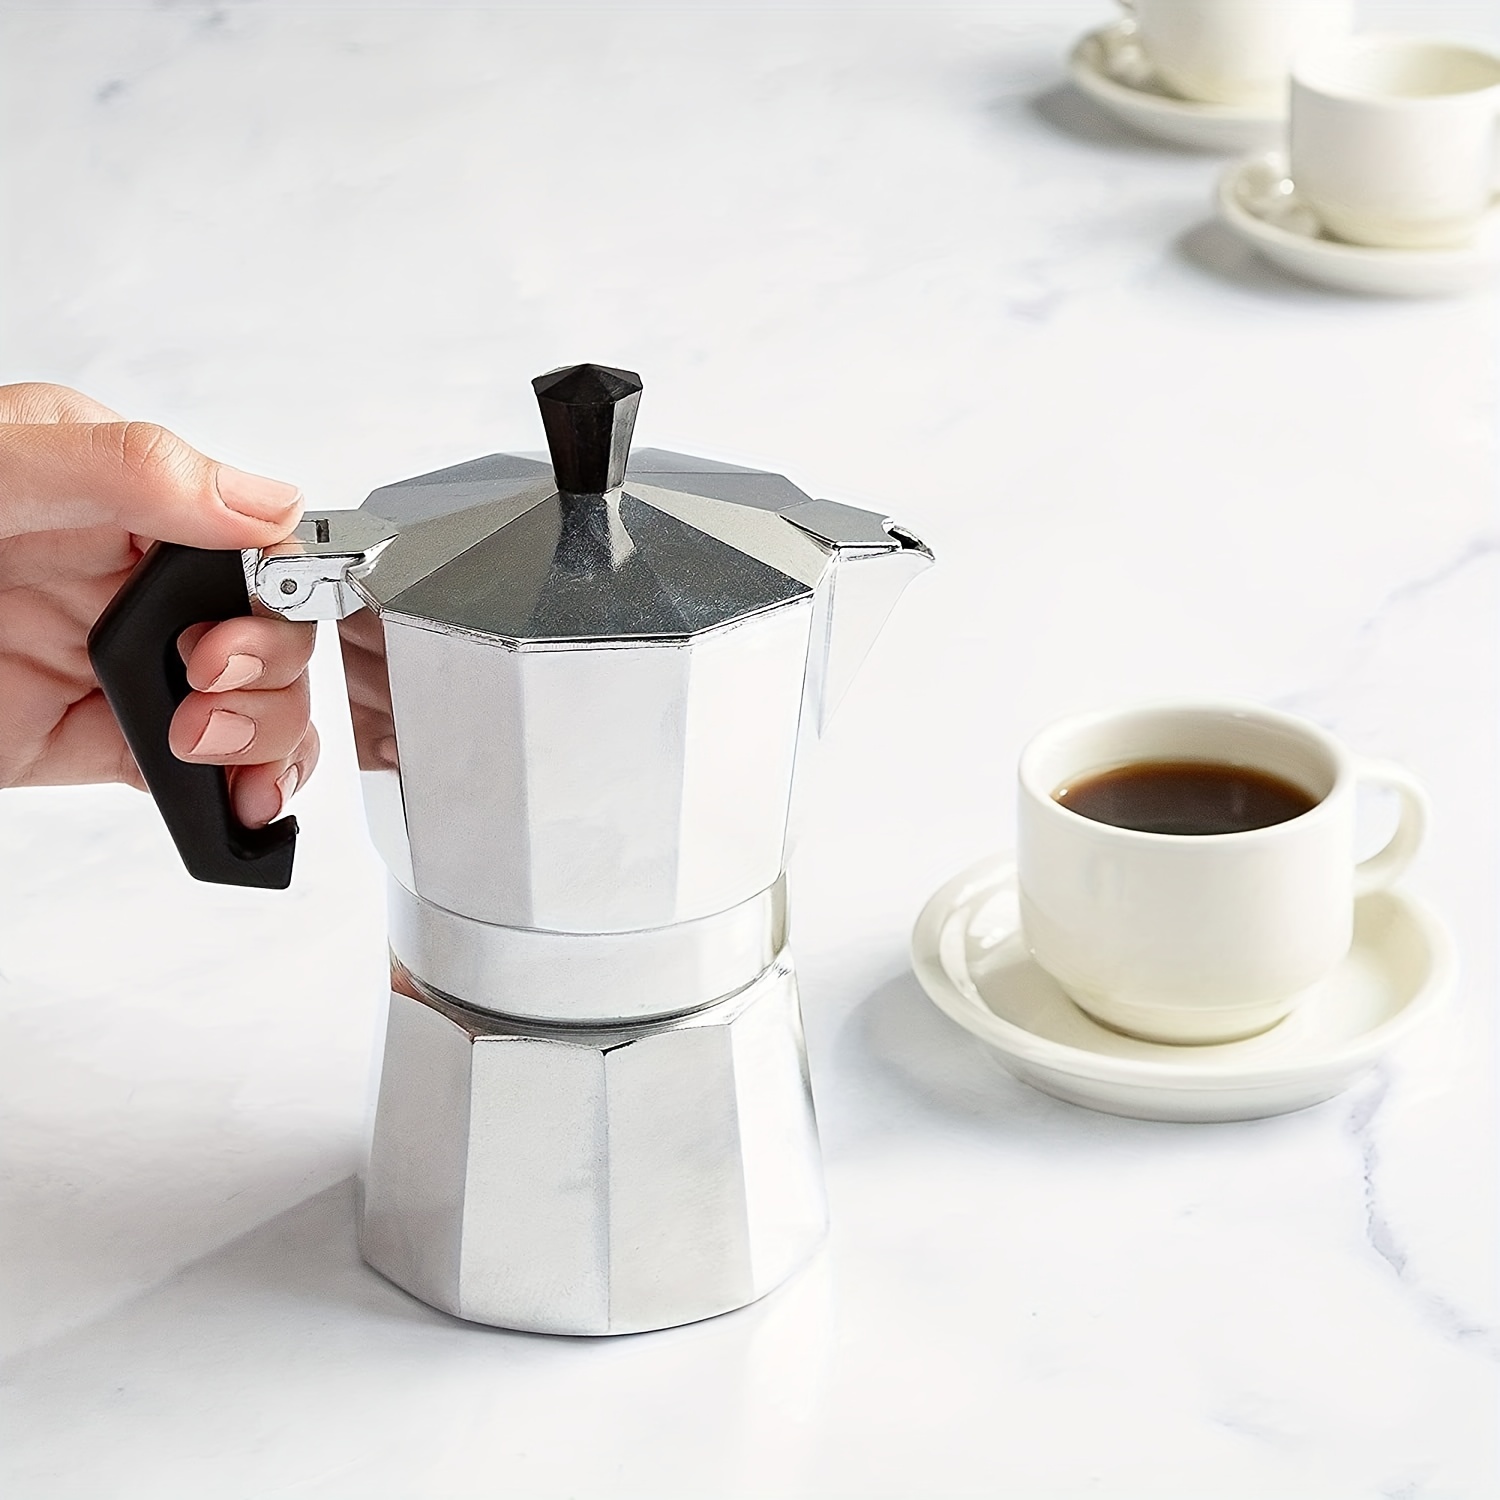 Greca Stovetop Espresso And Coffee Maker - Authentic Italian And